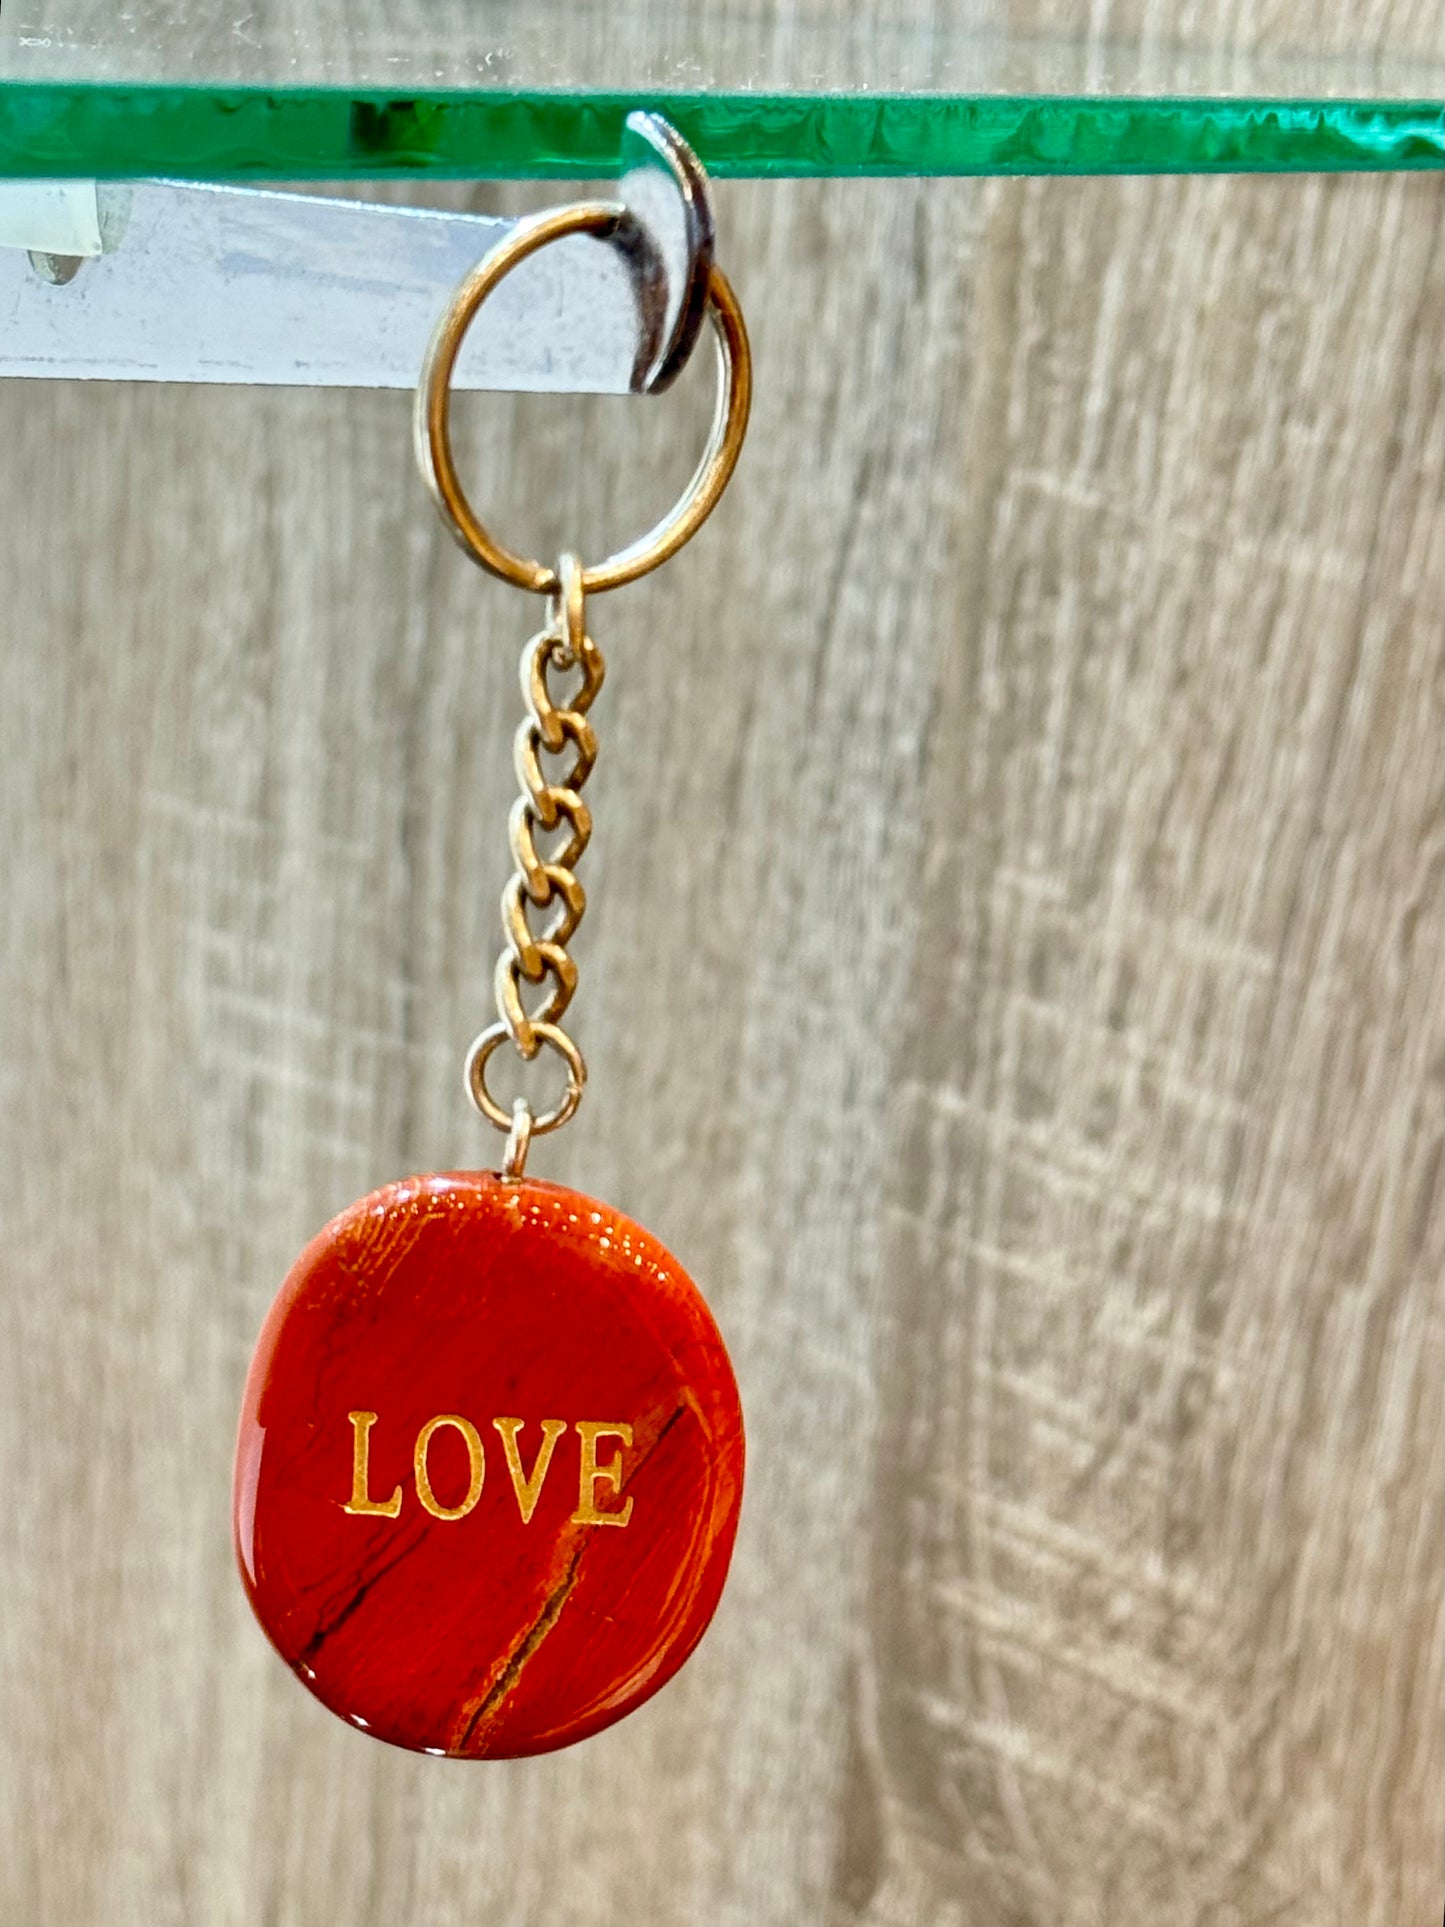 Red Jasper Key Chain - Love